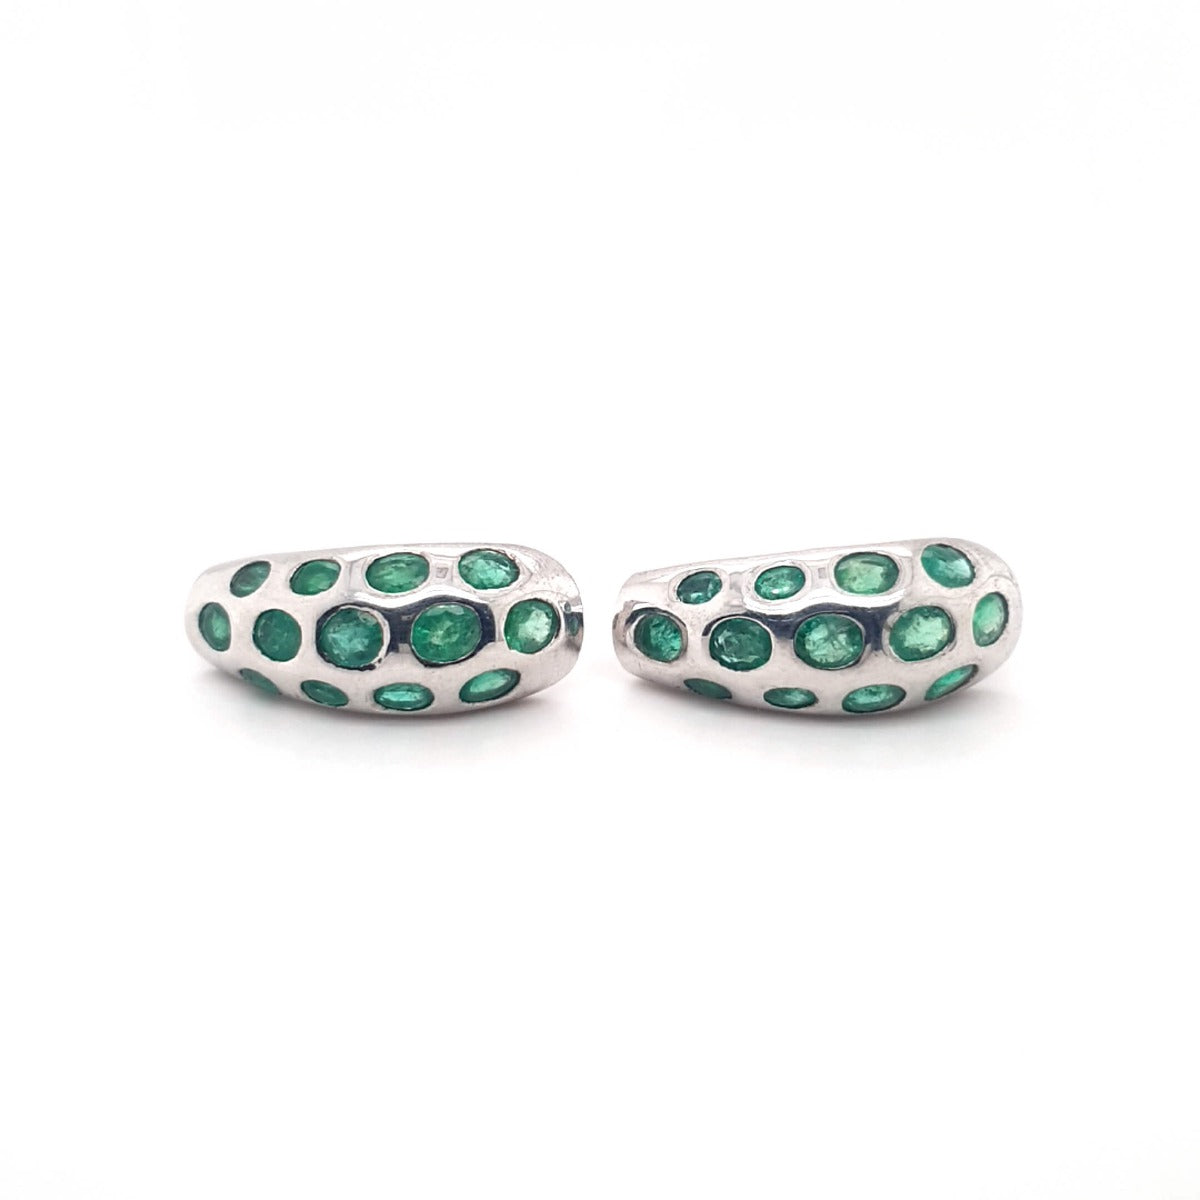 Fascinating emerald and diamond earrings